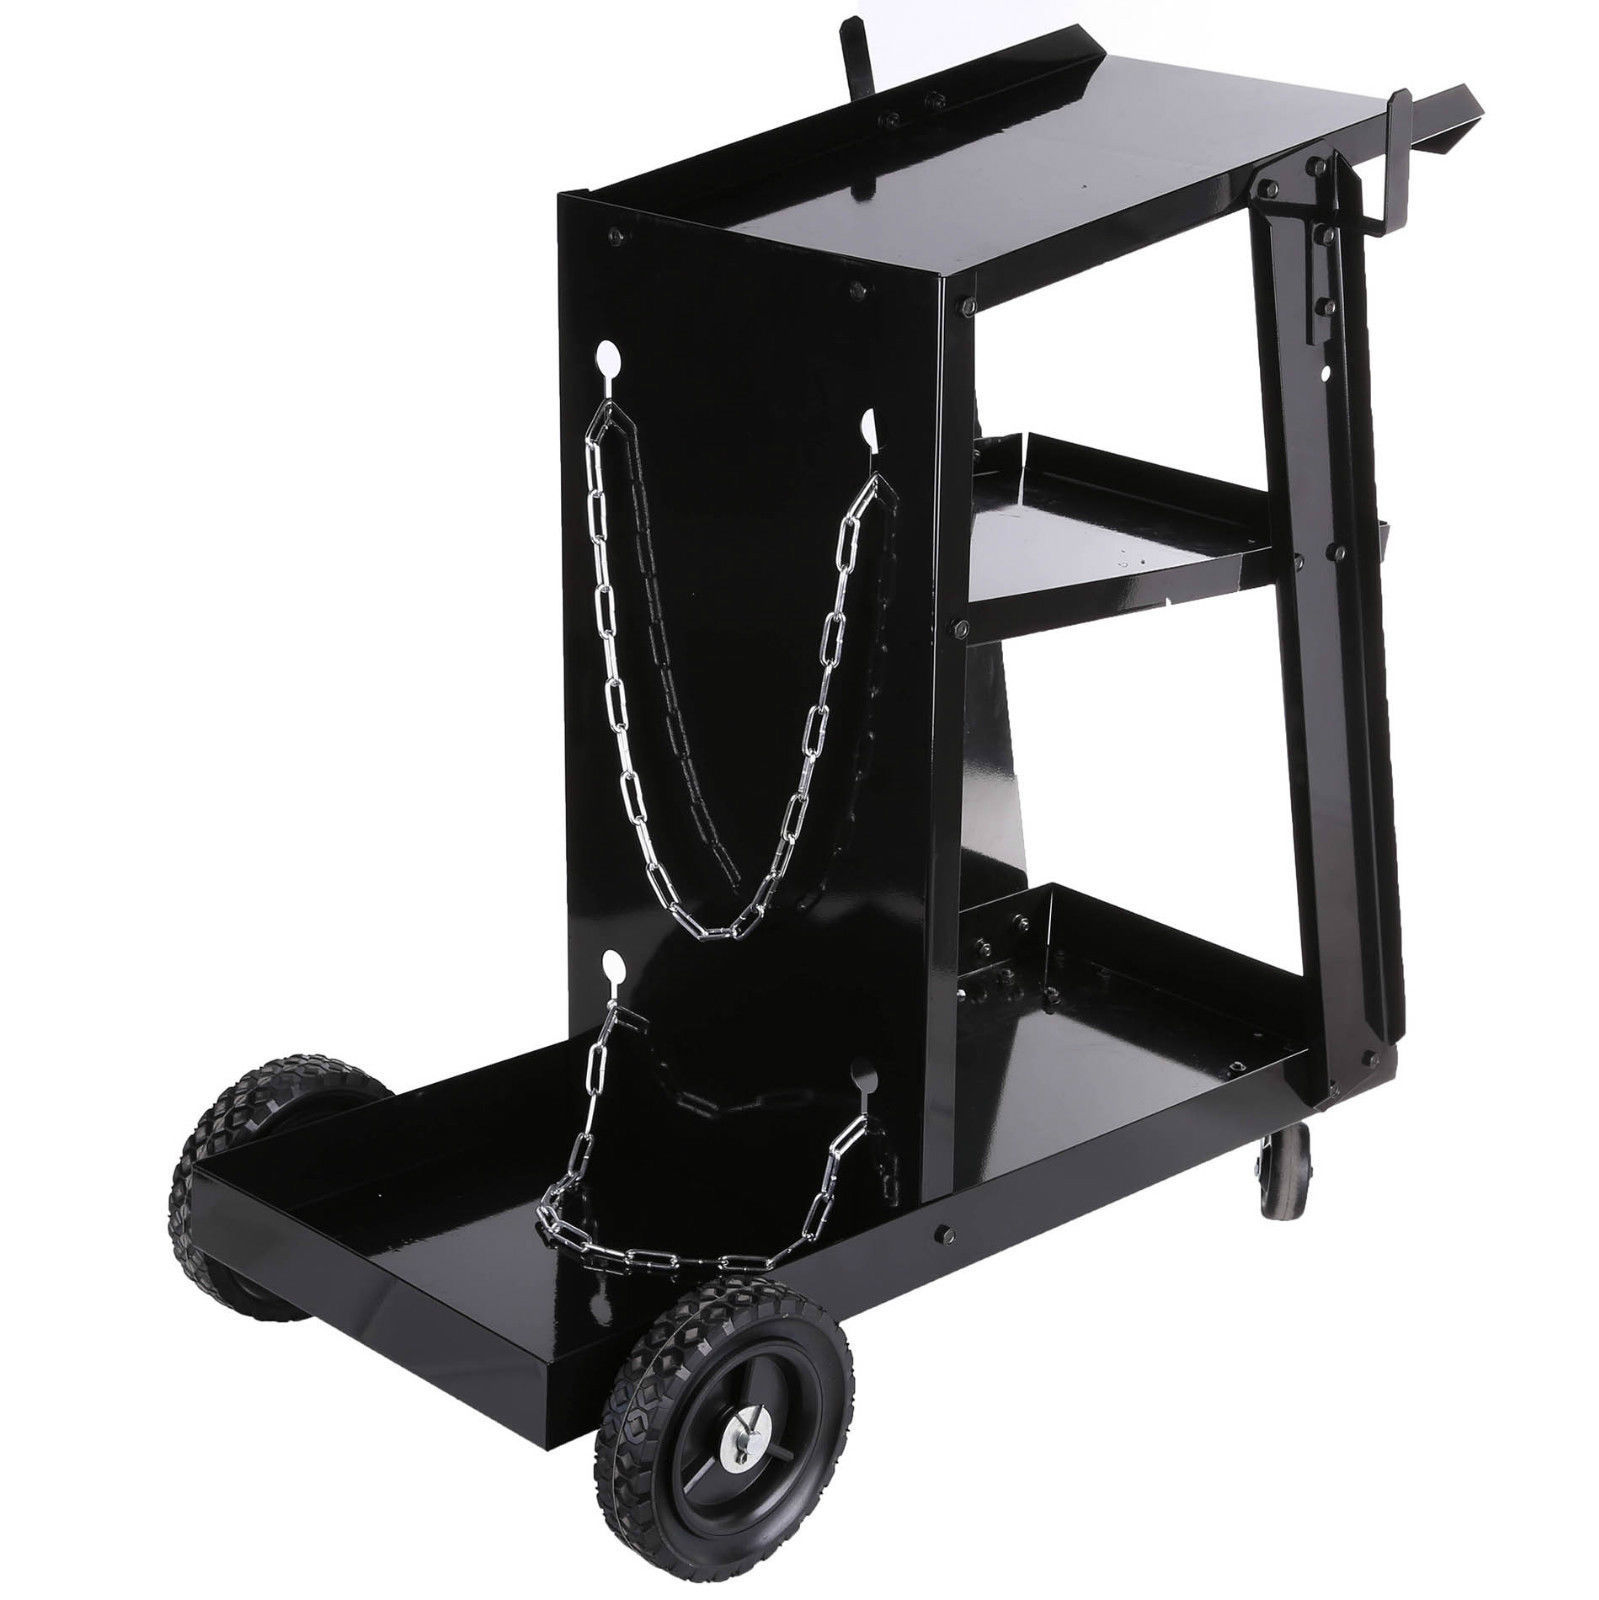 Welding Cart / Trolley for MIG TIG Arc Welder | eBay